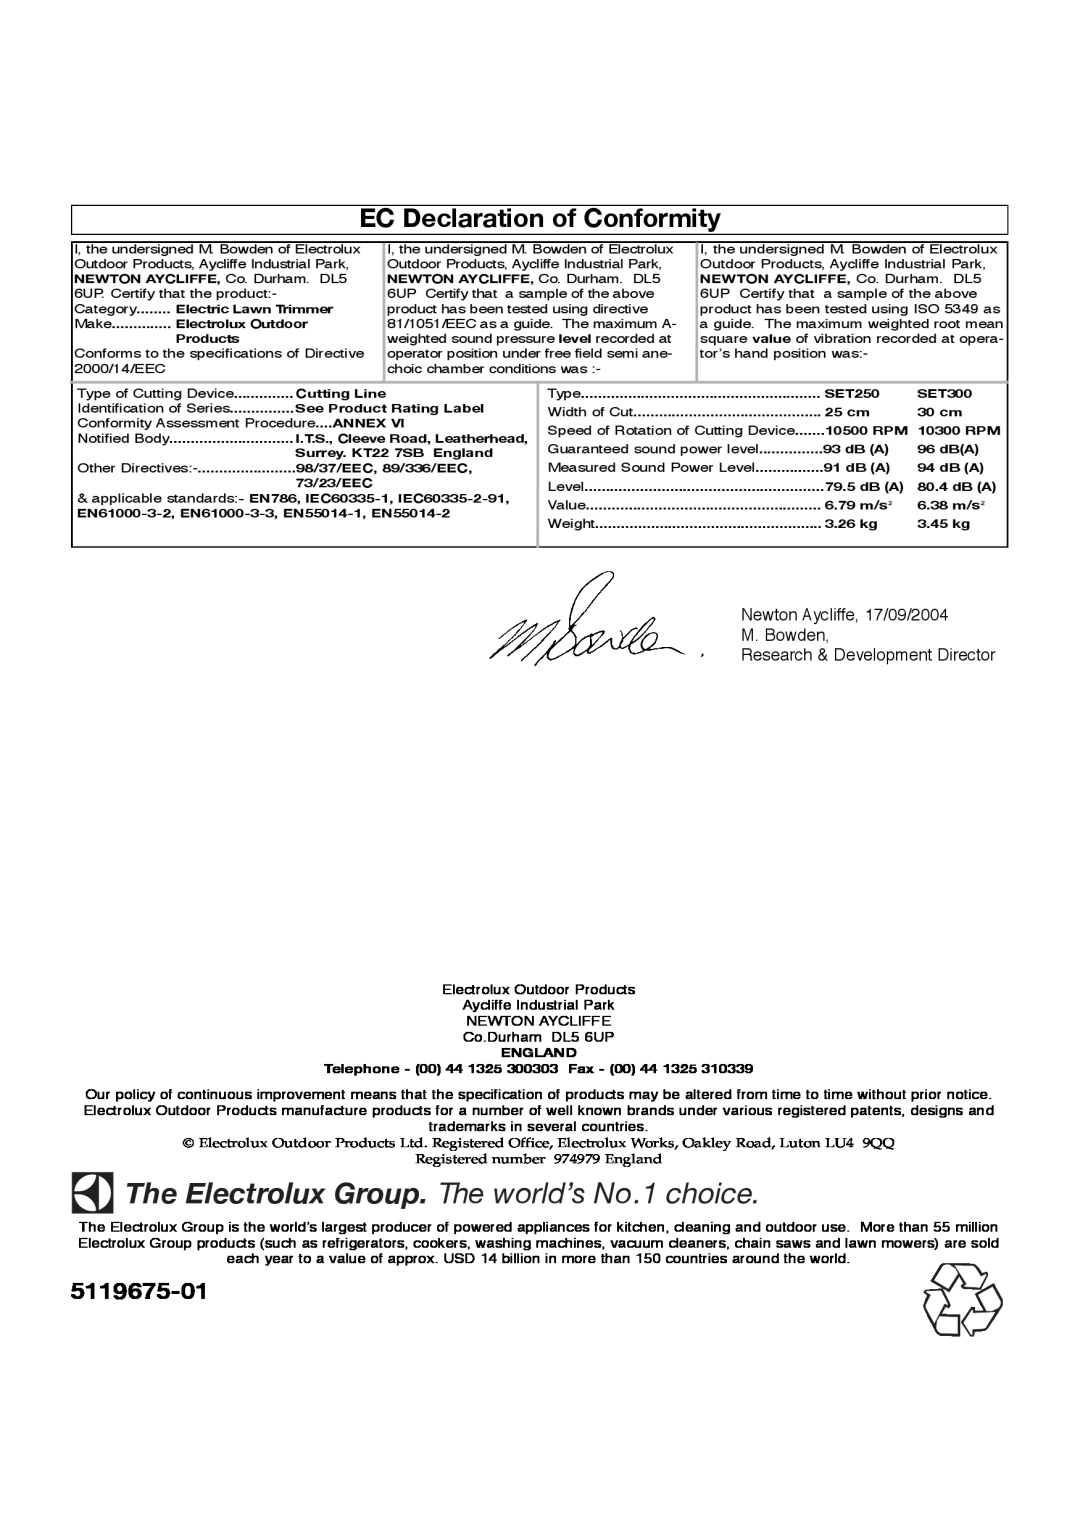 Flymo 511967501 manual EC Declaration of Conformity, Newton Aycliffe, 17/09/2004 M. Bowden Research & Development Director 